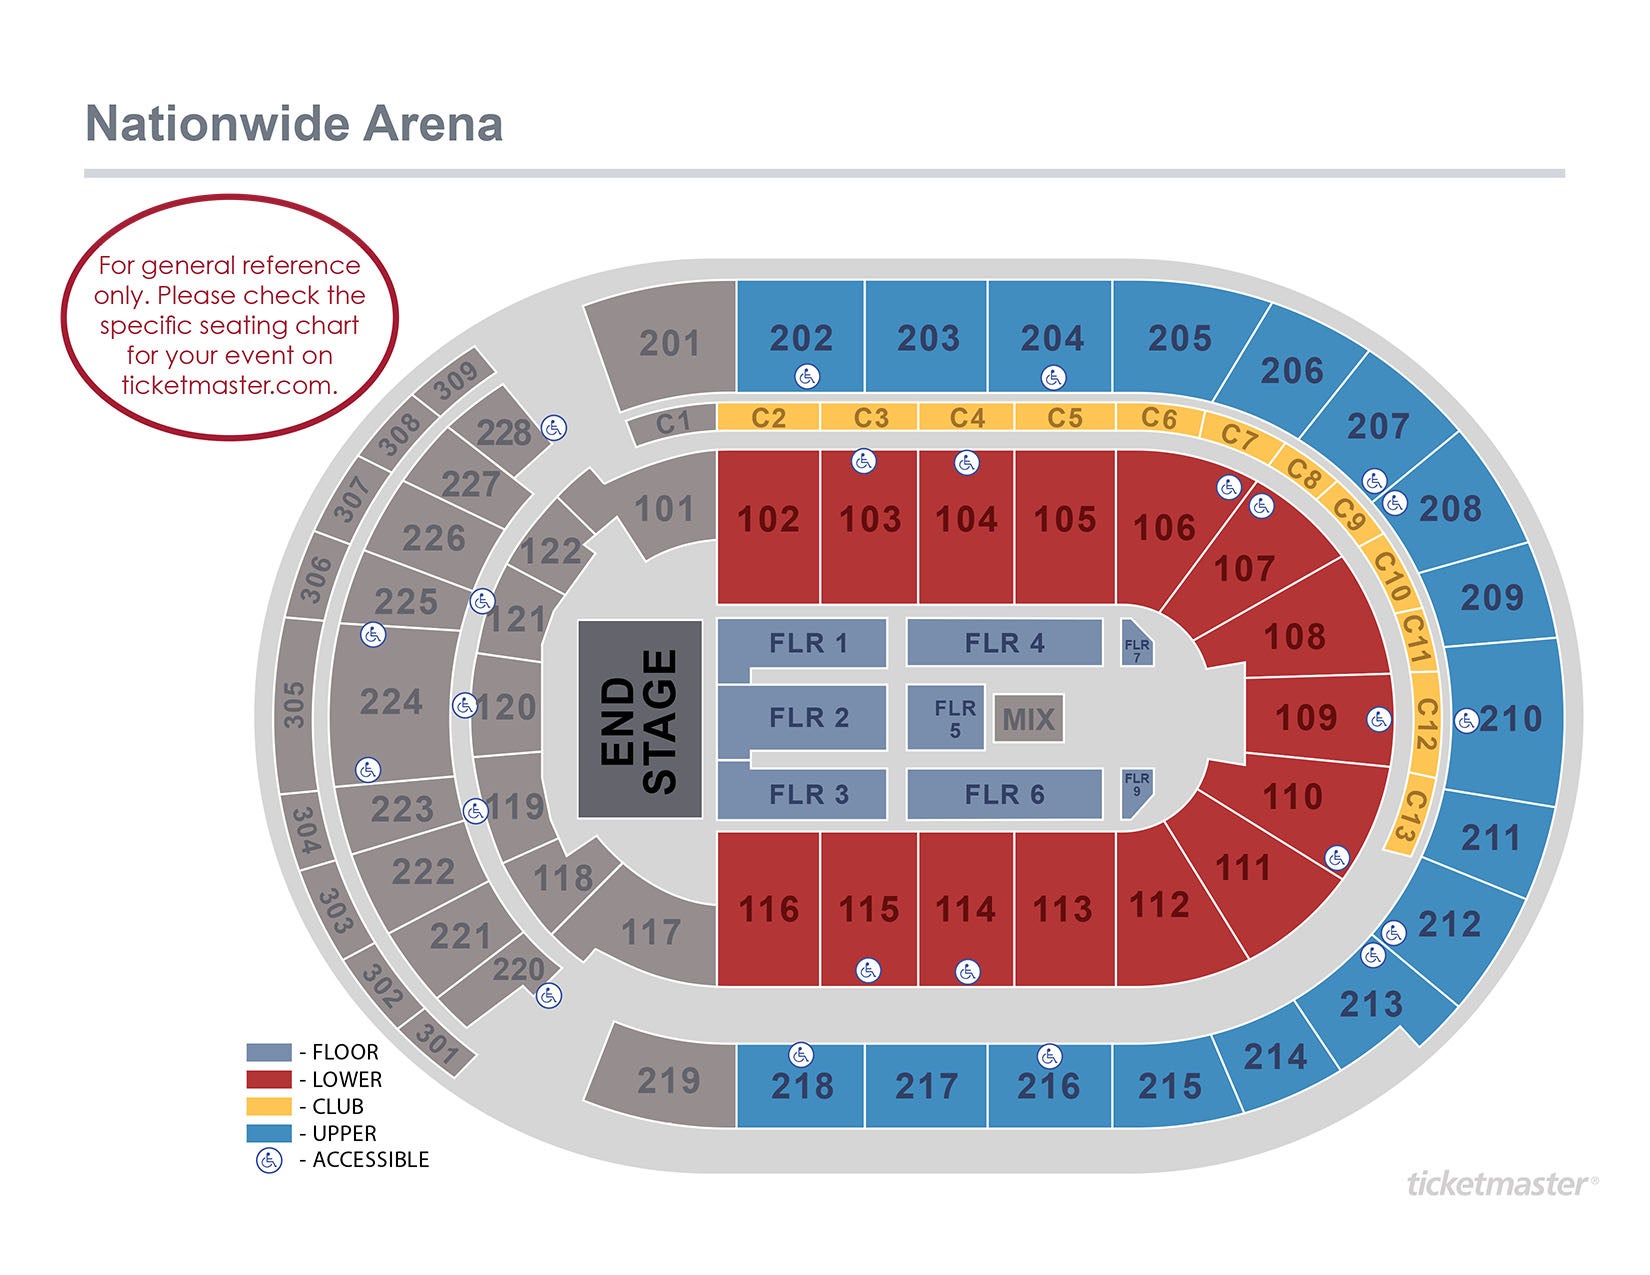 bc stadium seating map